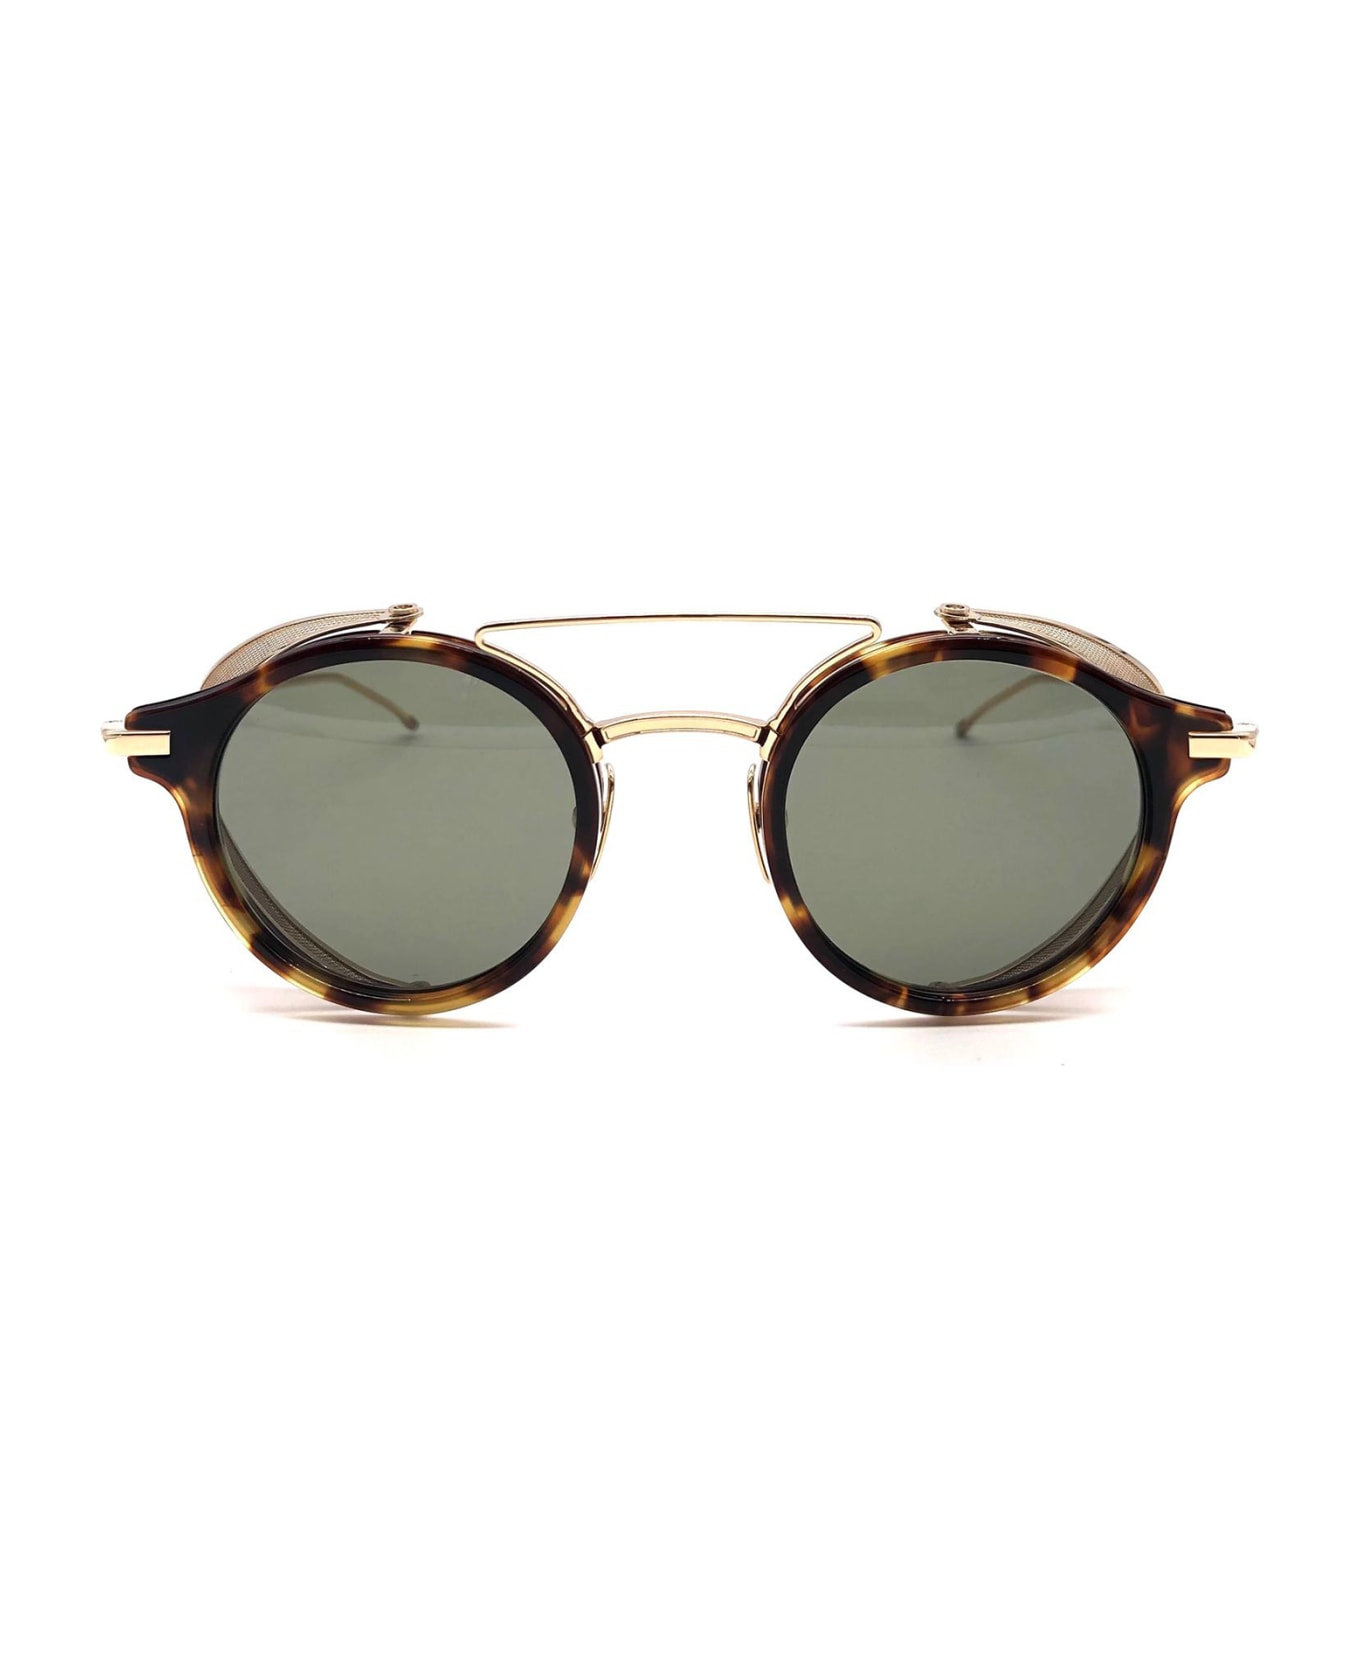 Thom Browne Ues804a/g0003 Sunglasses - tortoise/gold